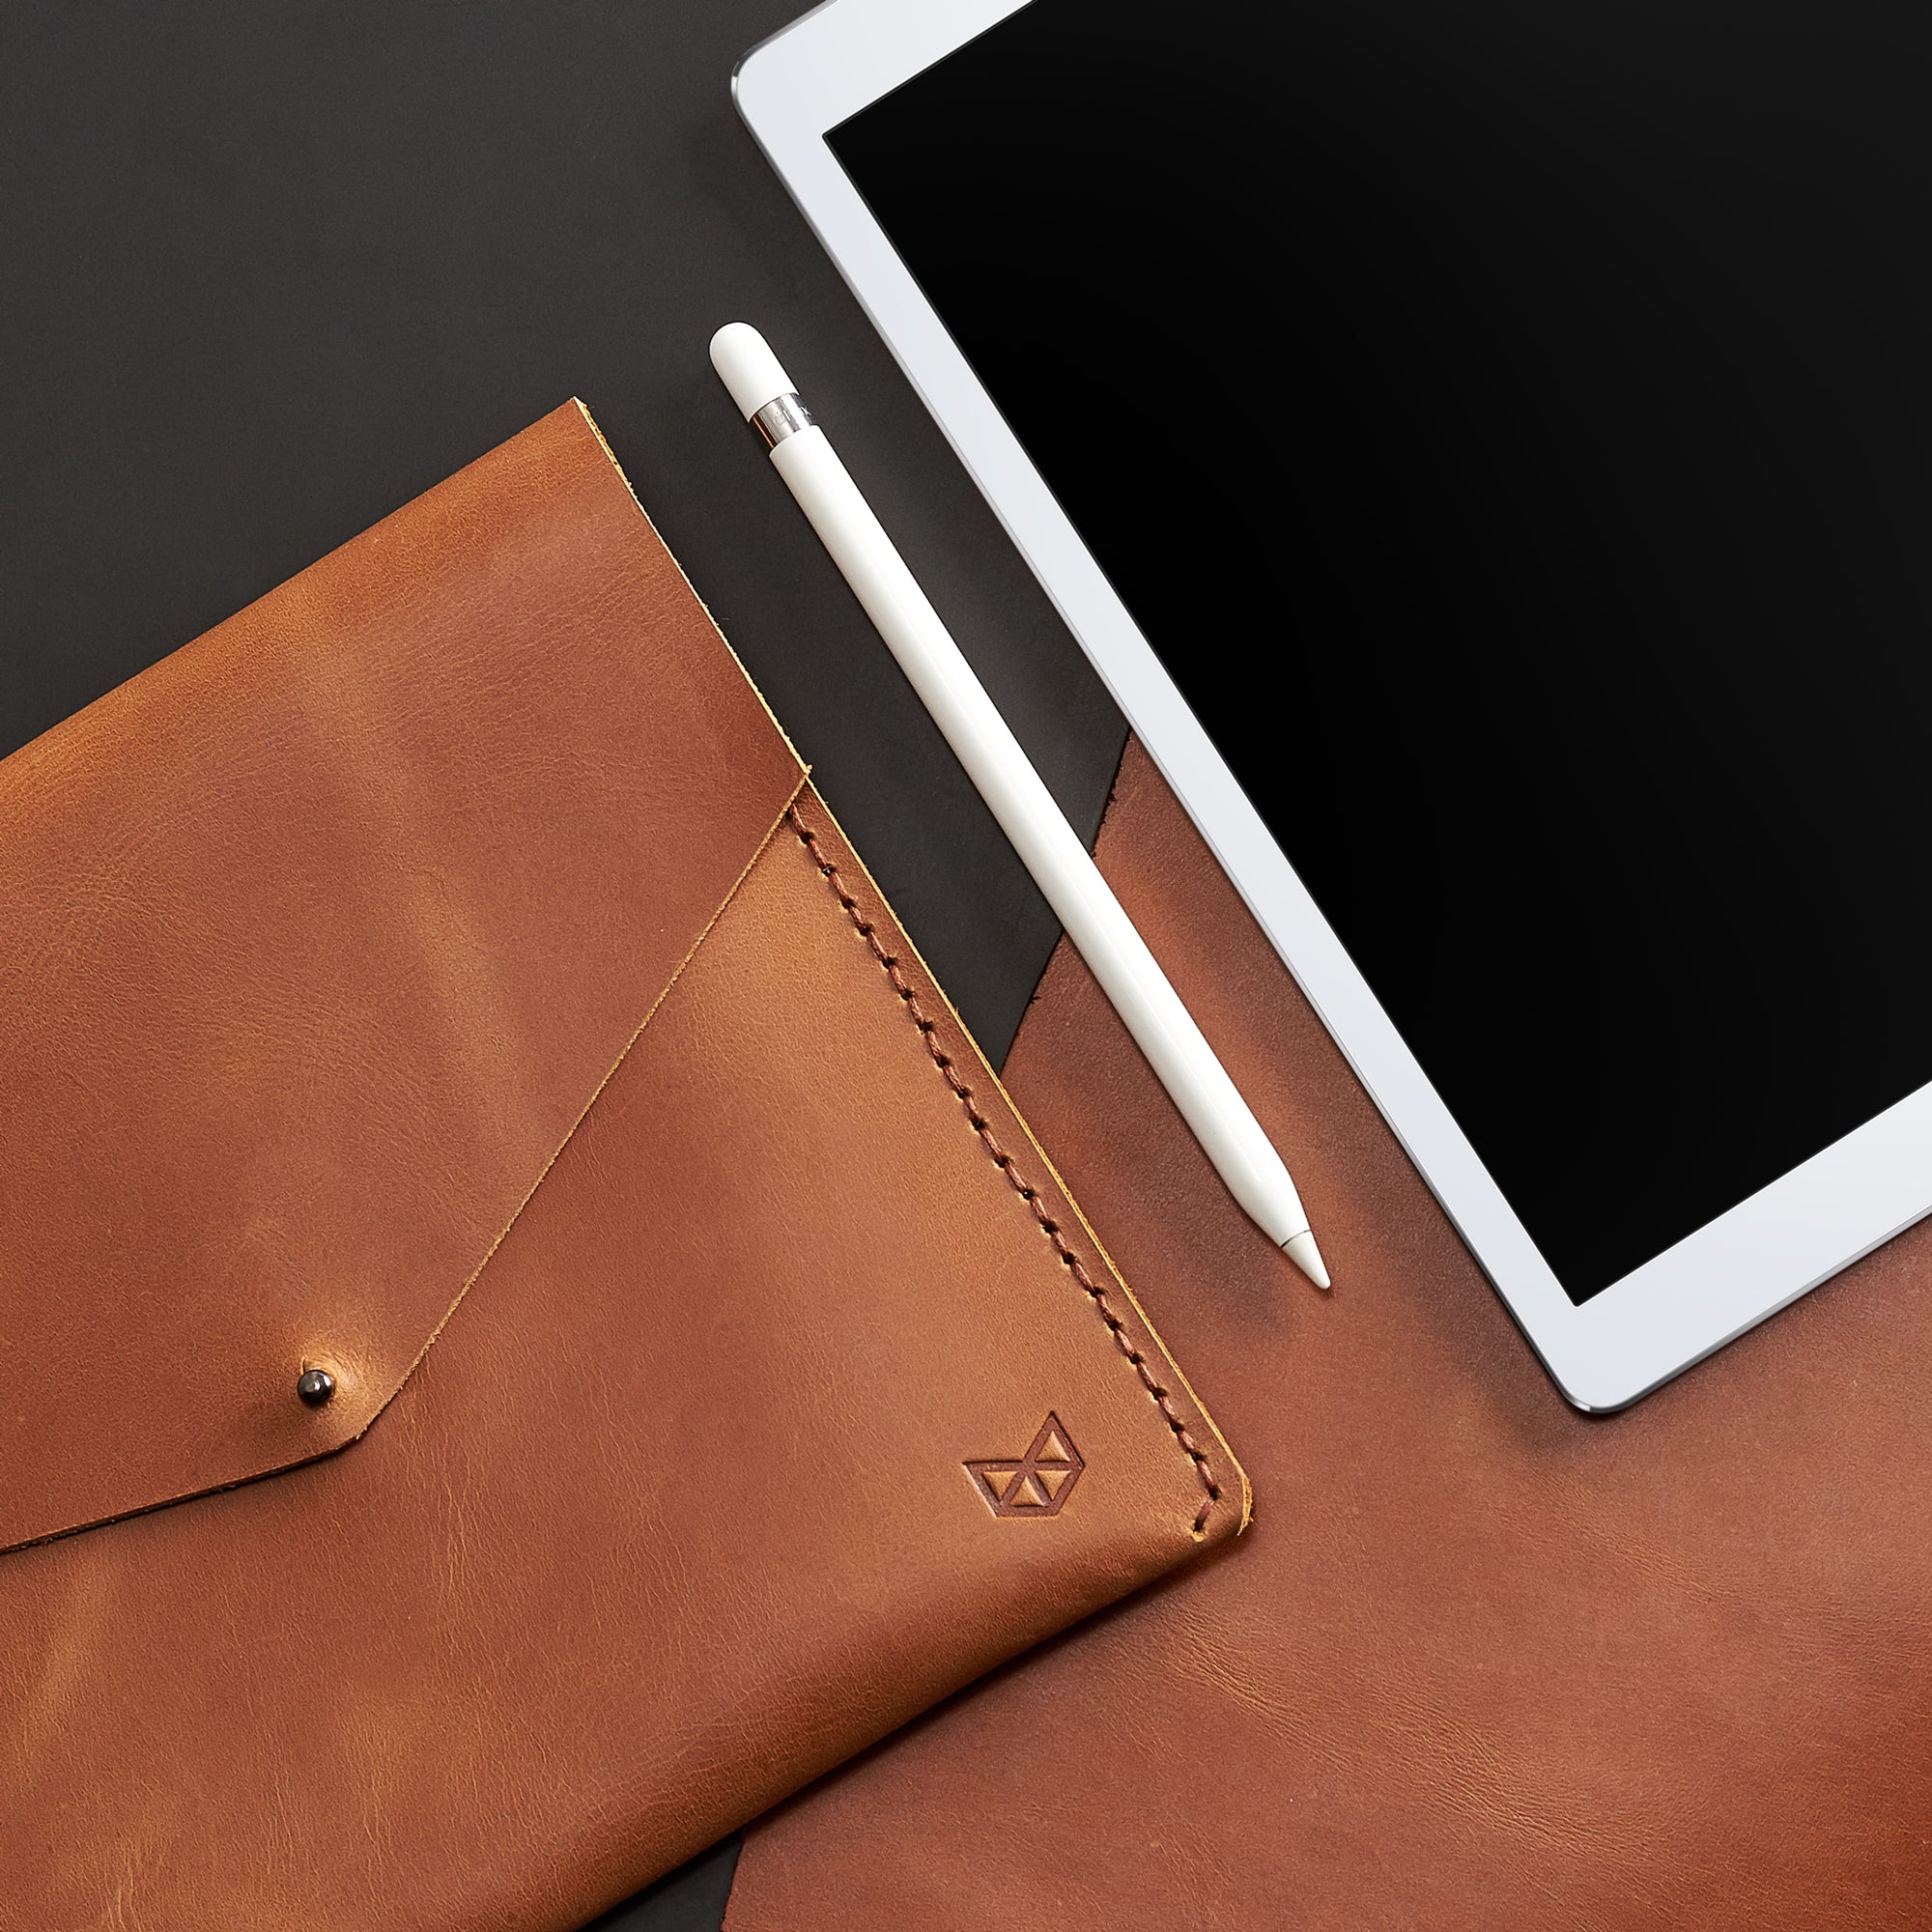 New iPad 9.7 inch bag. Light brown leather sleeve for iPad pro. Case for iPad Pro 10.5 inch 12.9 inch. Mens gifts